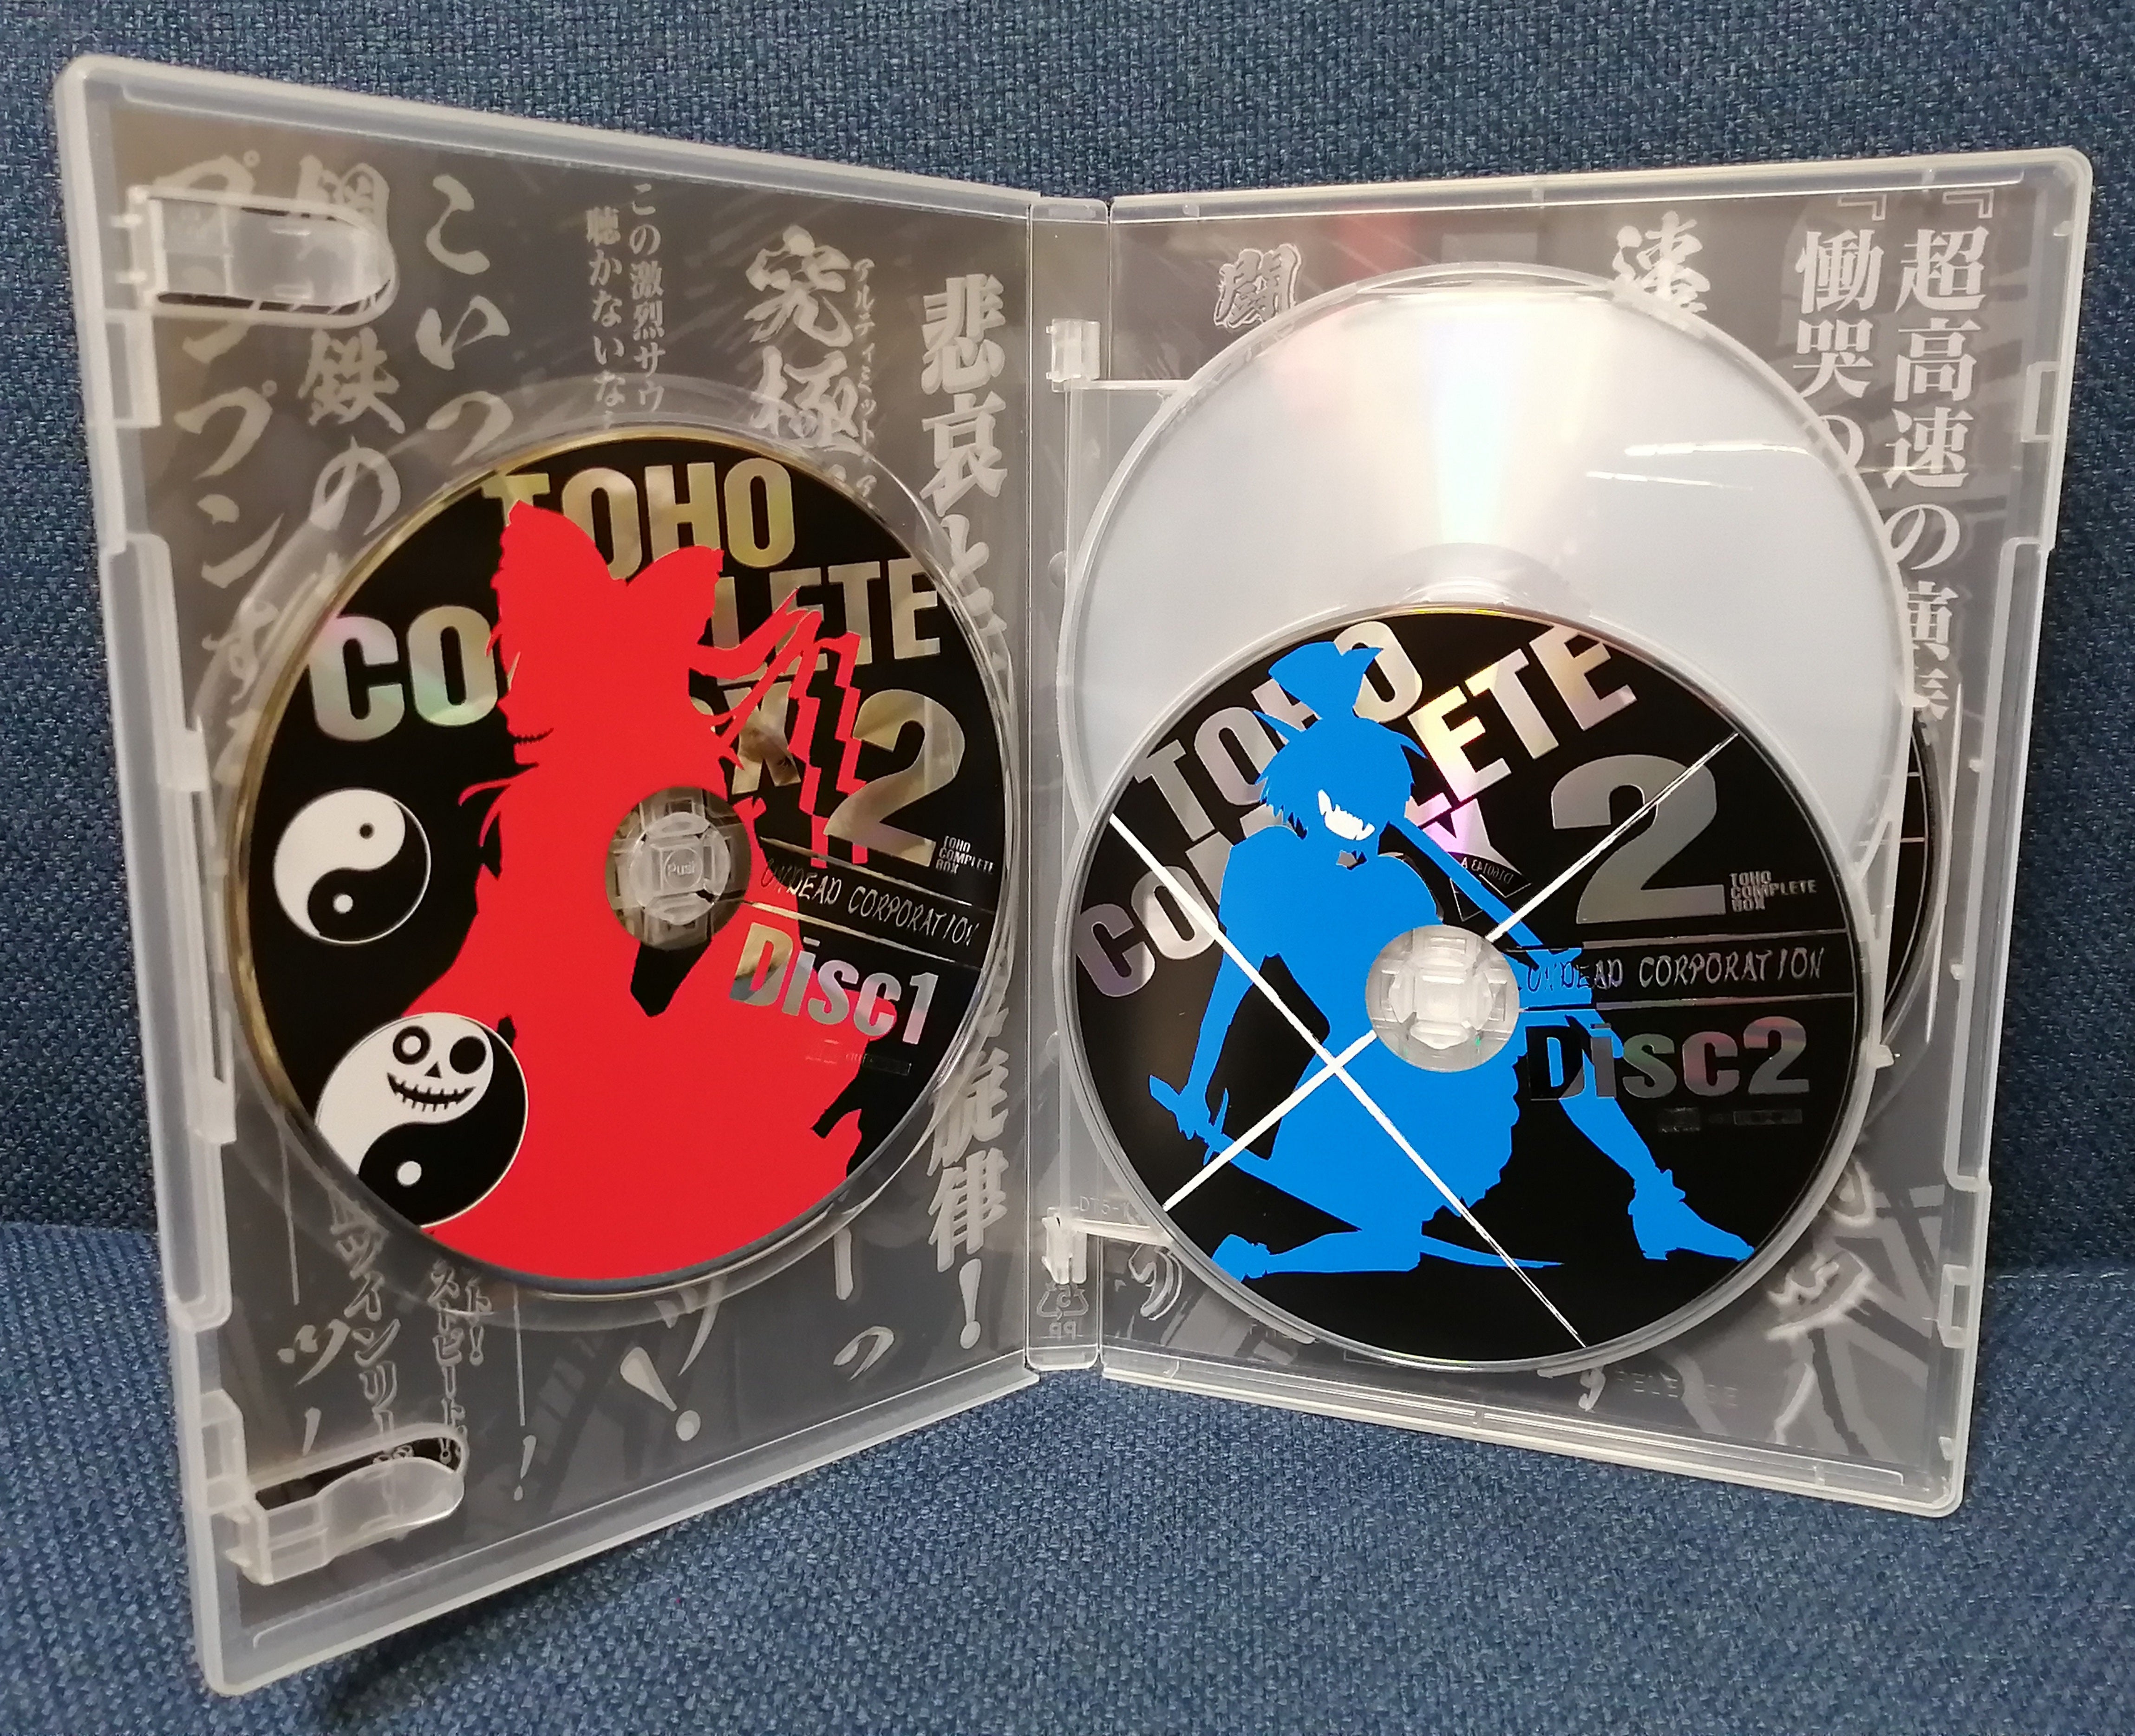 Undead Corporation – Toho Complete Box 2 4CD Compilation – Ongaku 